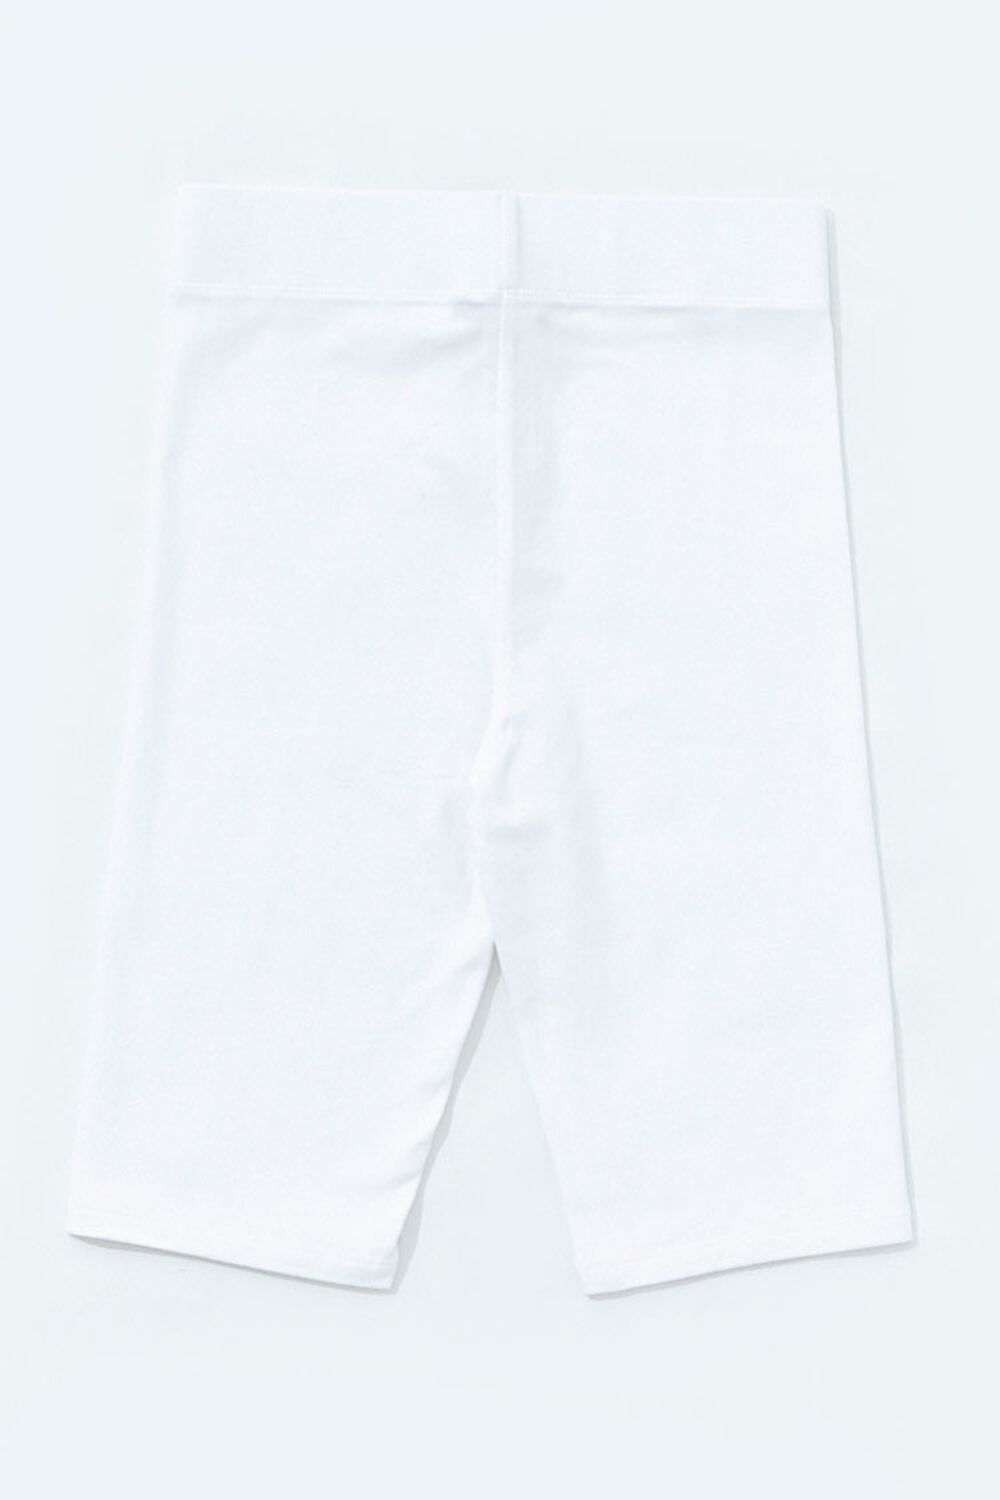 WHITE 11-Inch High-Rise Biker Shorts, image 2